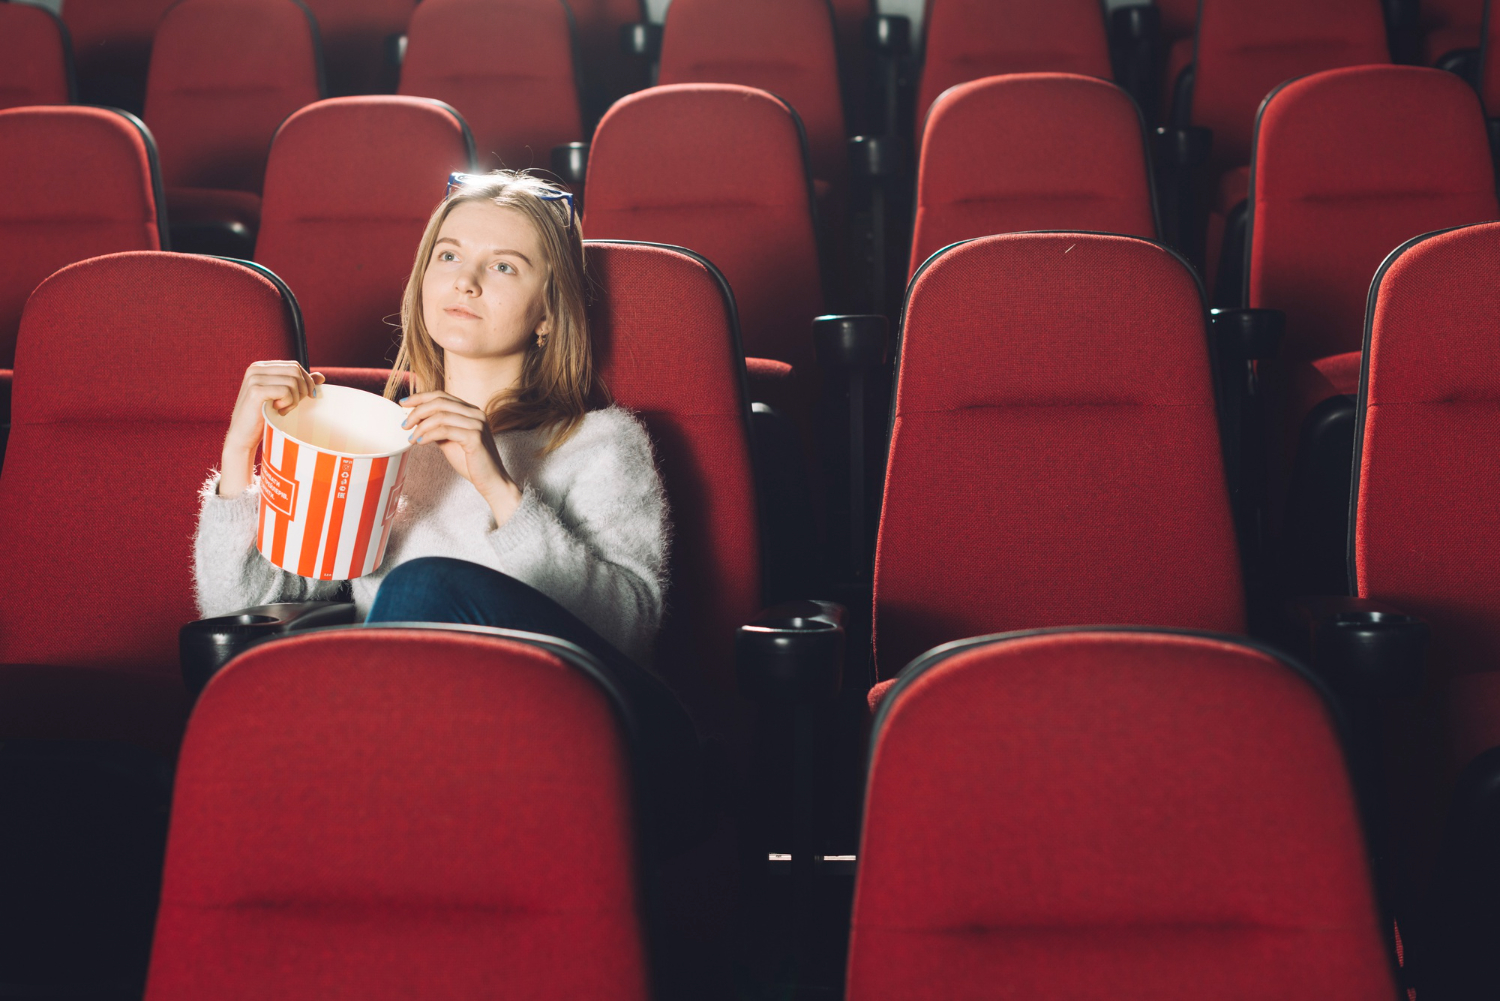 woman-with-popcorn-cinema-auditorium